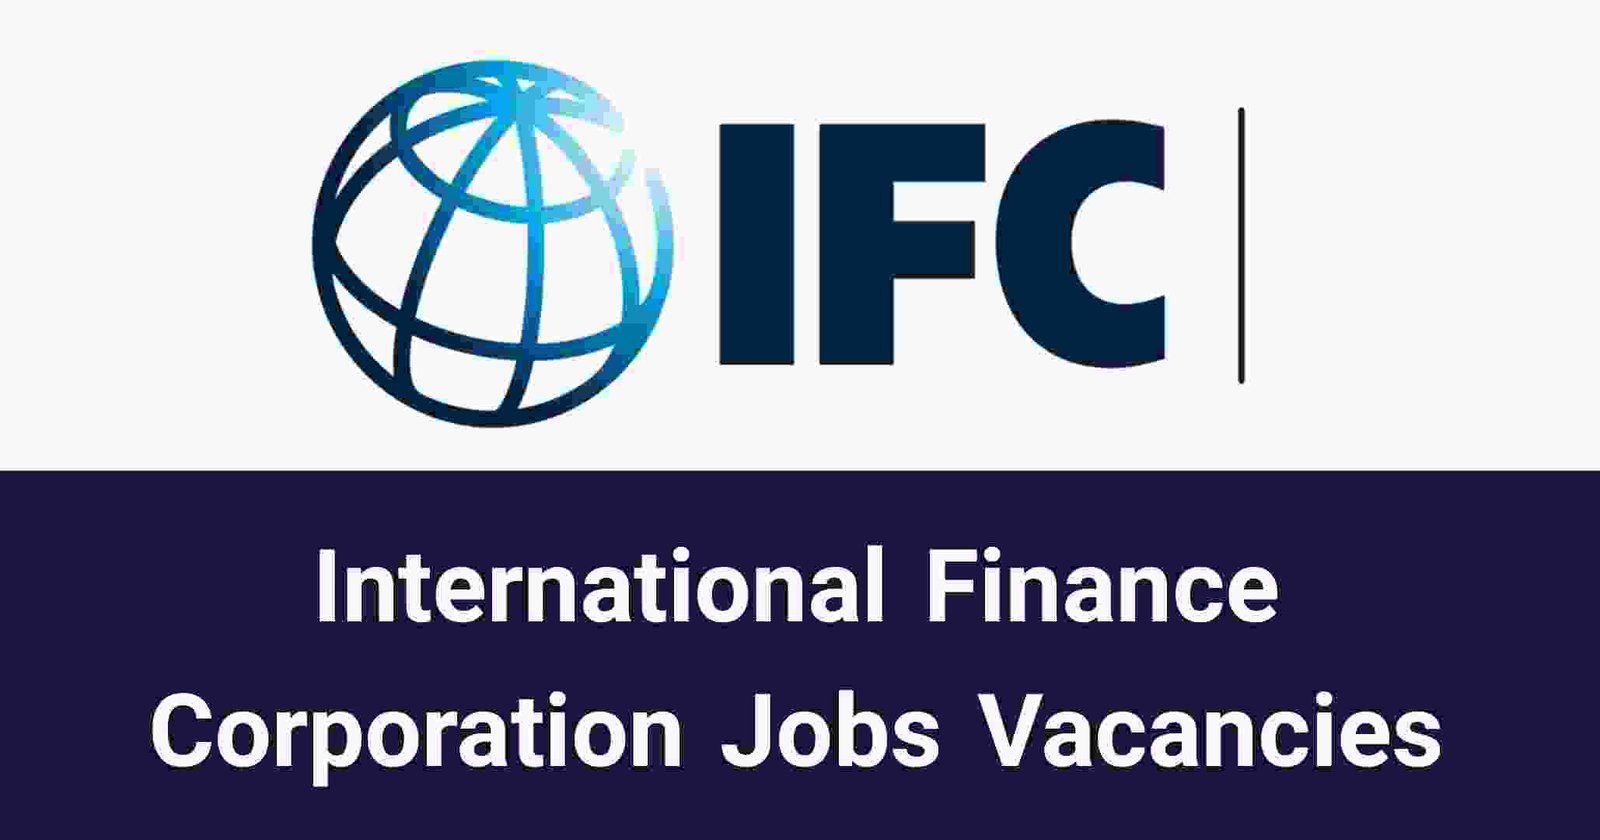 International Finance Corporation Jobs Vacancies